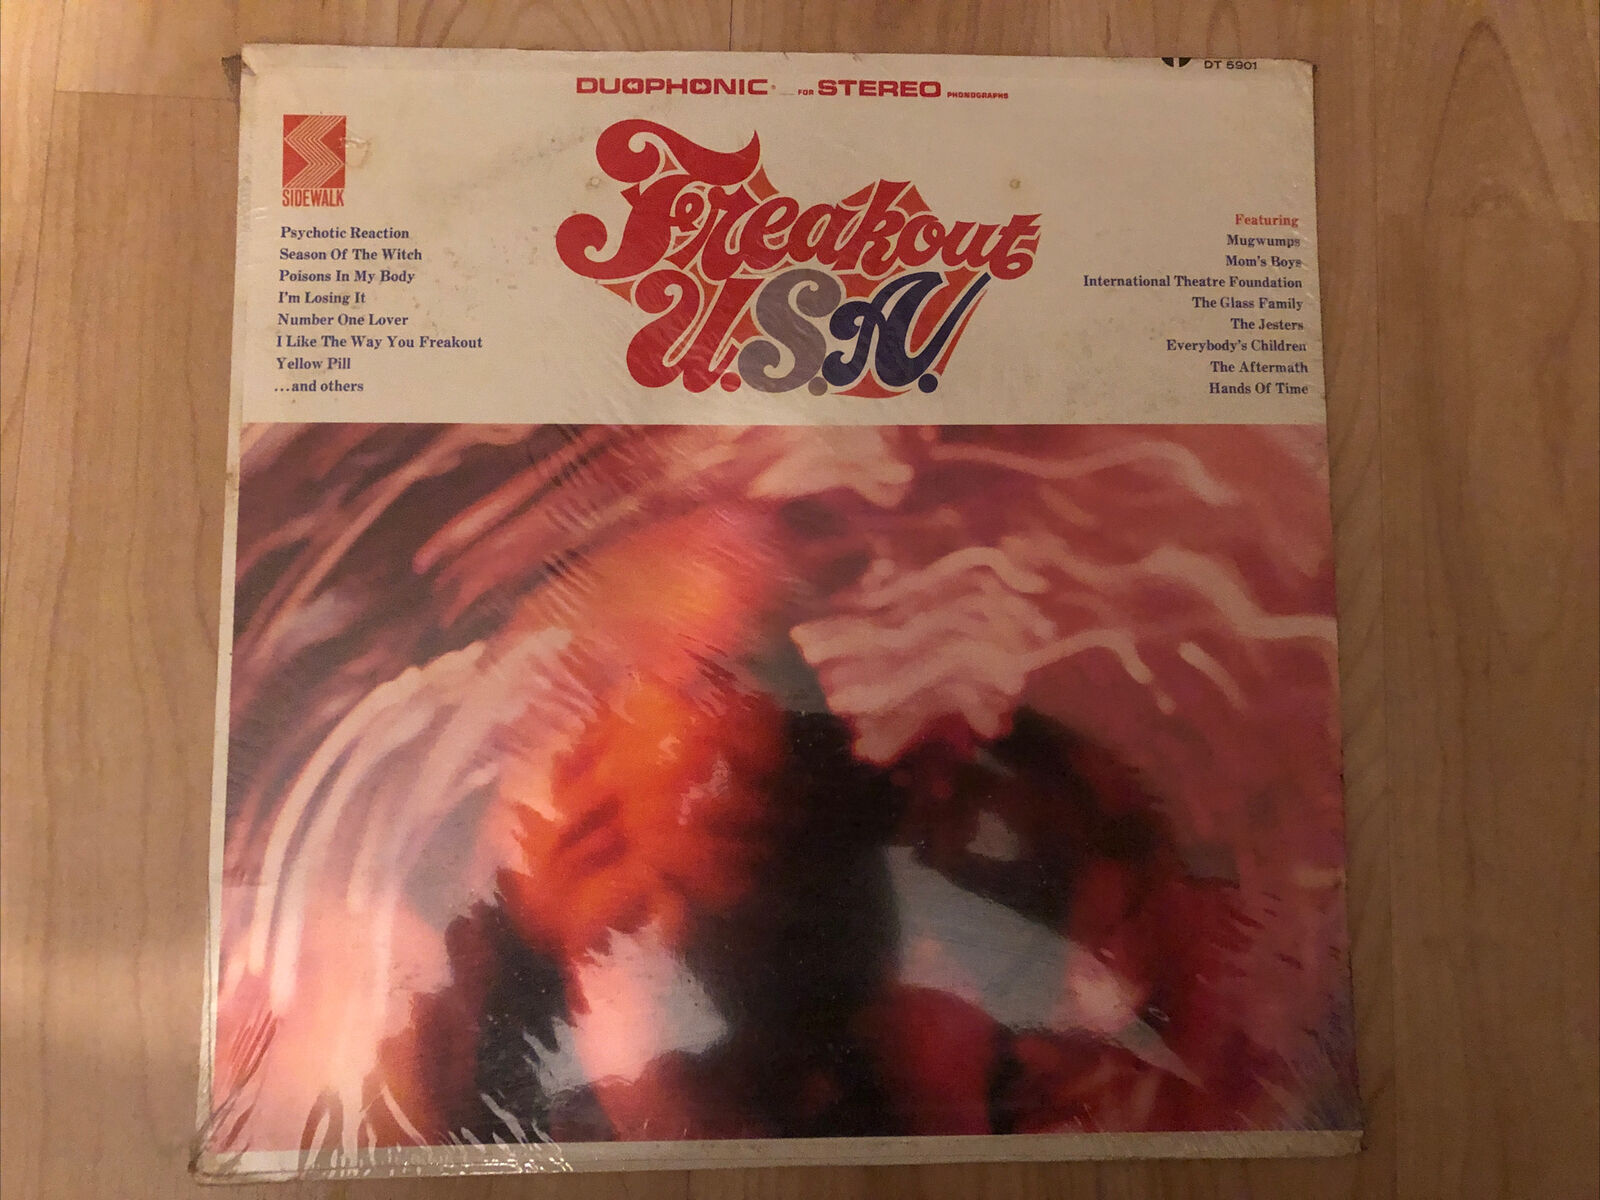 Freakout U.S.A. 1967 Sidewalk DT 5901 Sealed Vinyl NM Glass Family